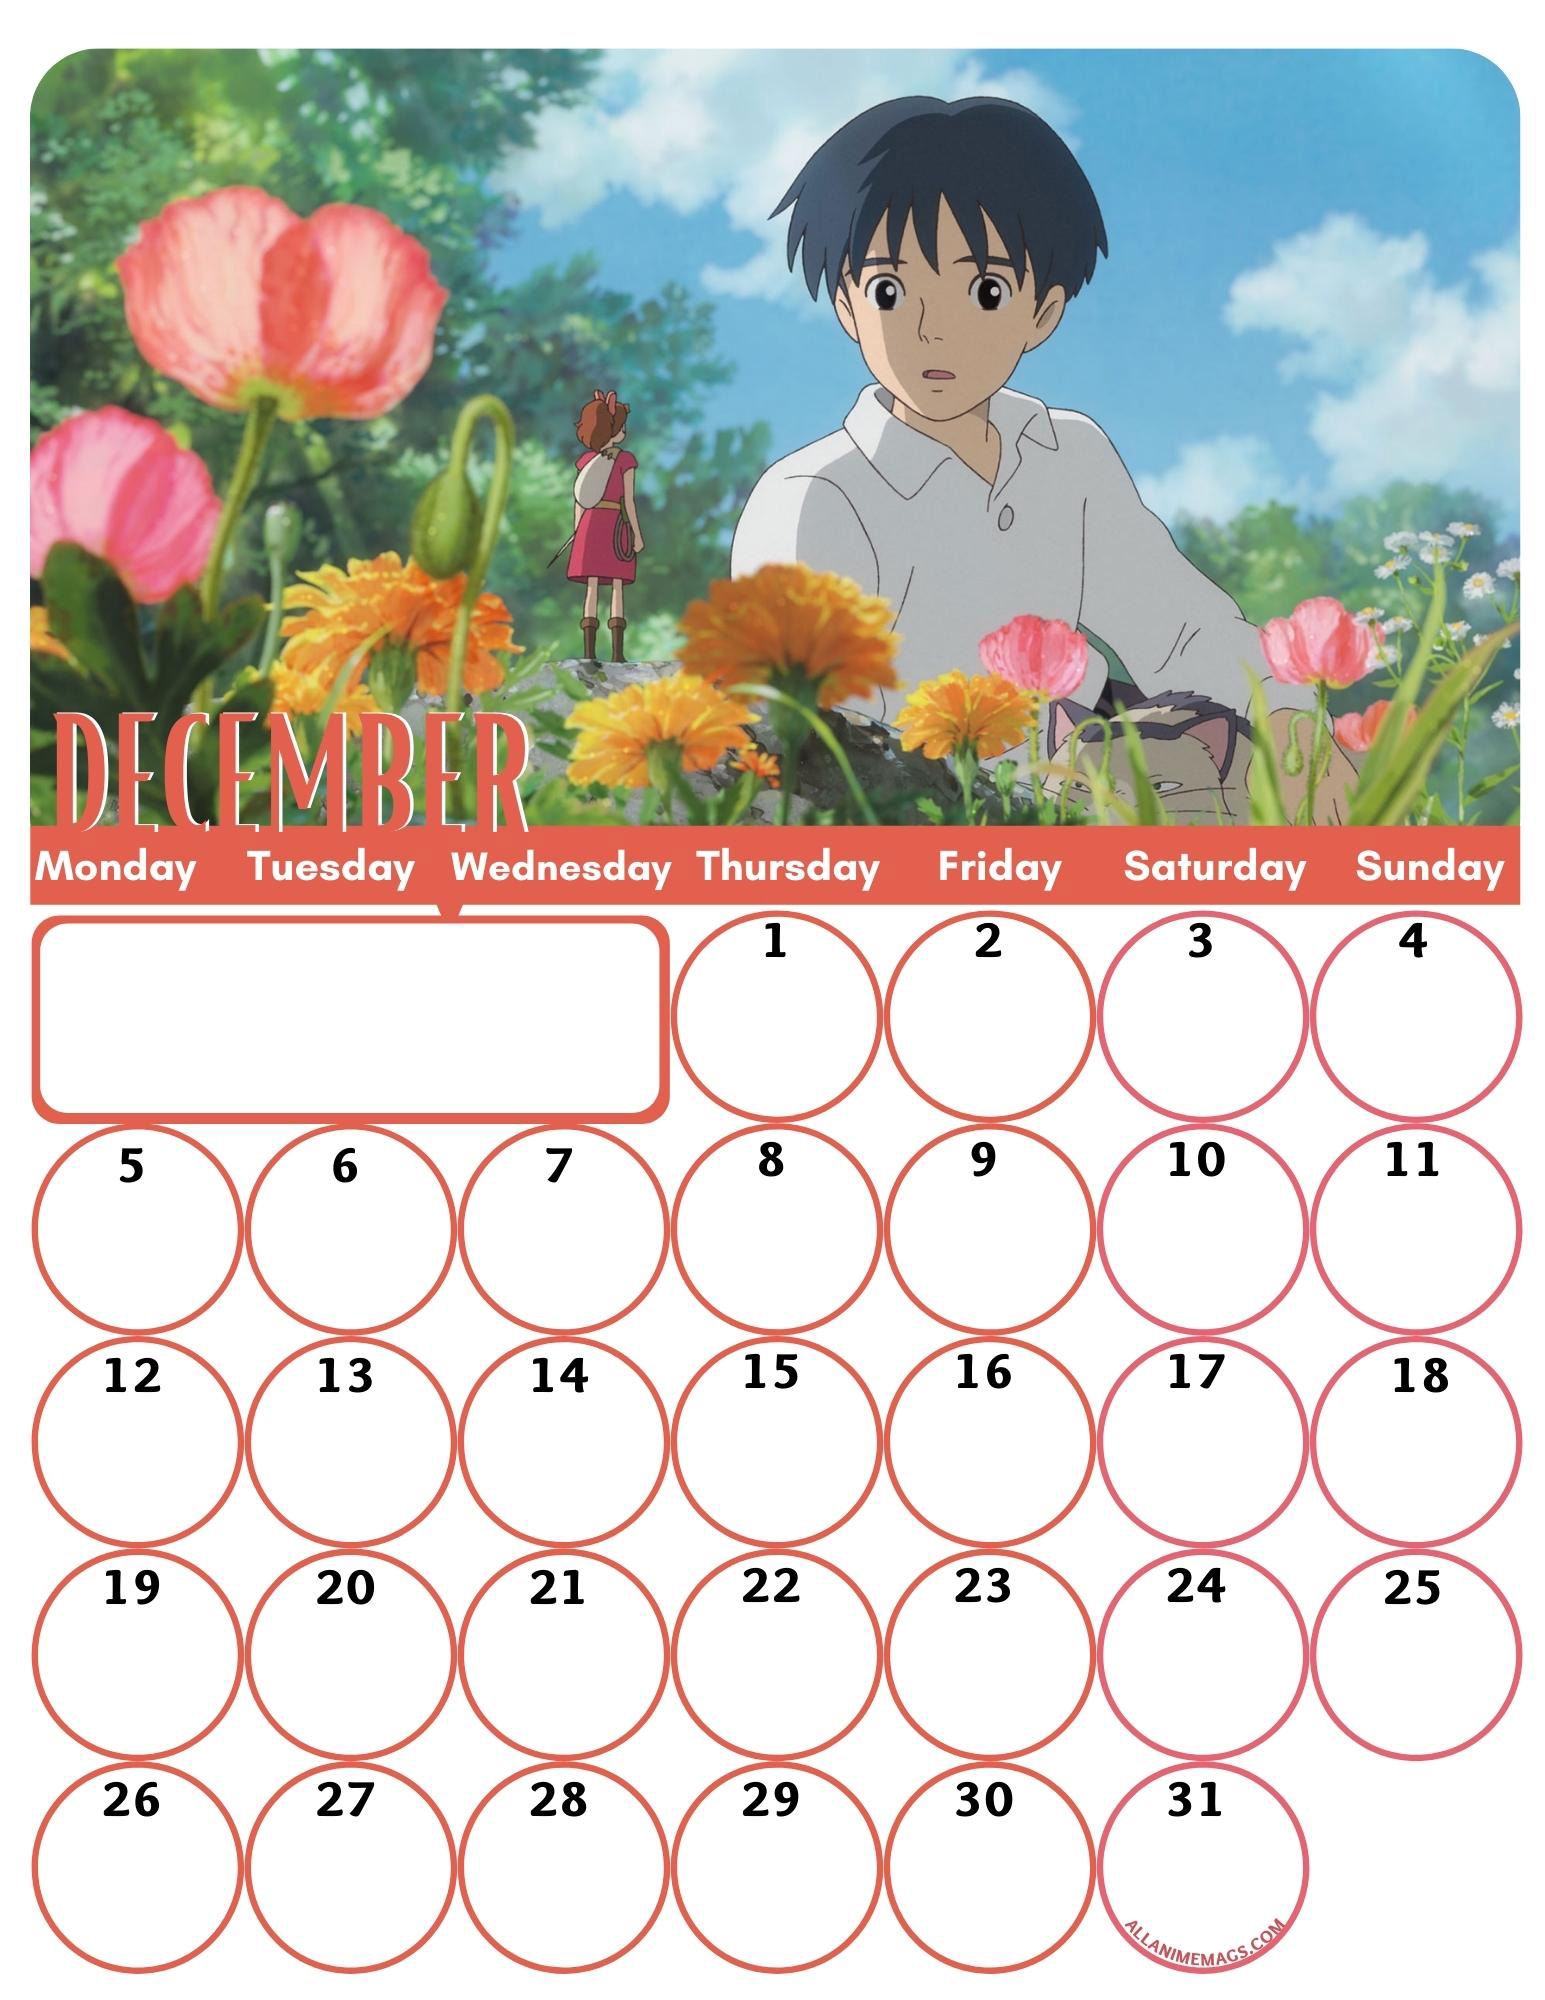 12-December-Free-Studio-Ghibli-Anime-Wall-Calendar-2022-AllAnimeMag